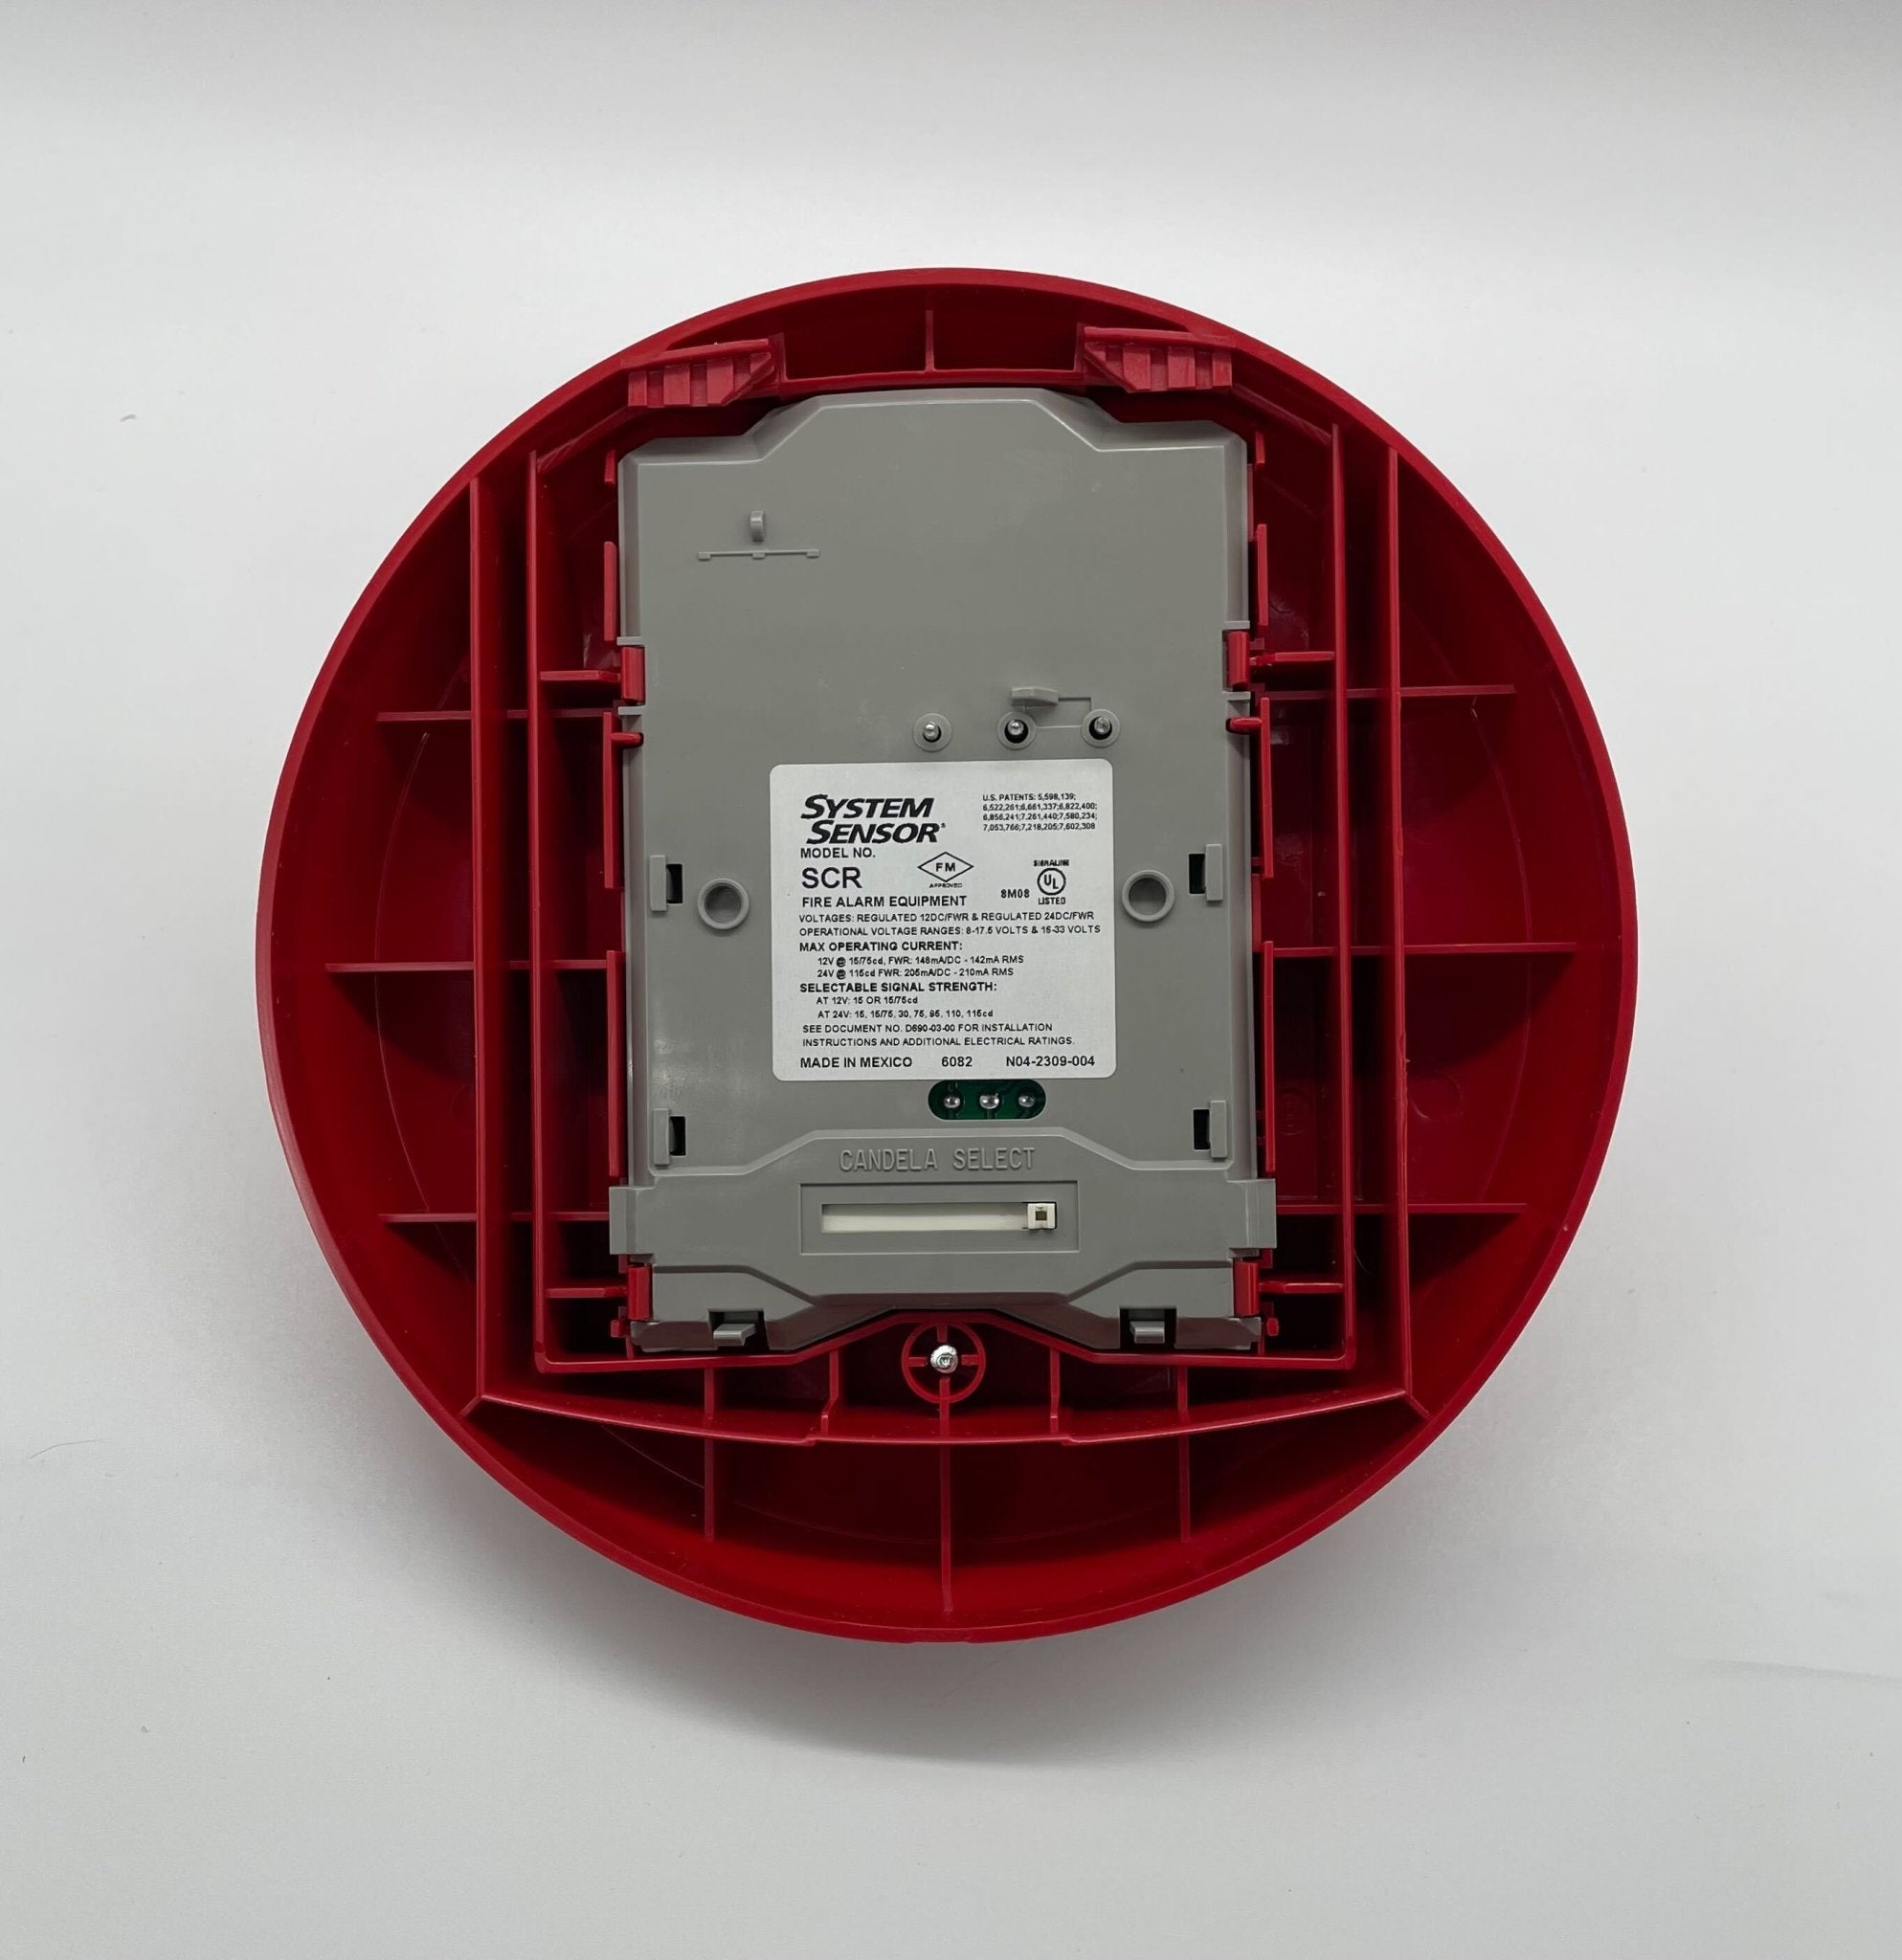 System Sensor SCR - The Fire Alarm Supplier